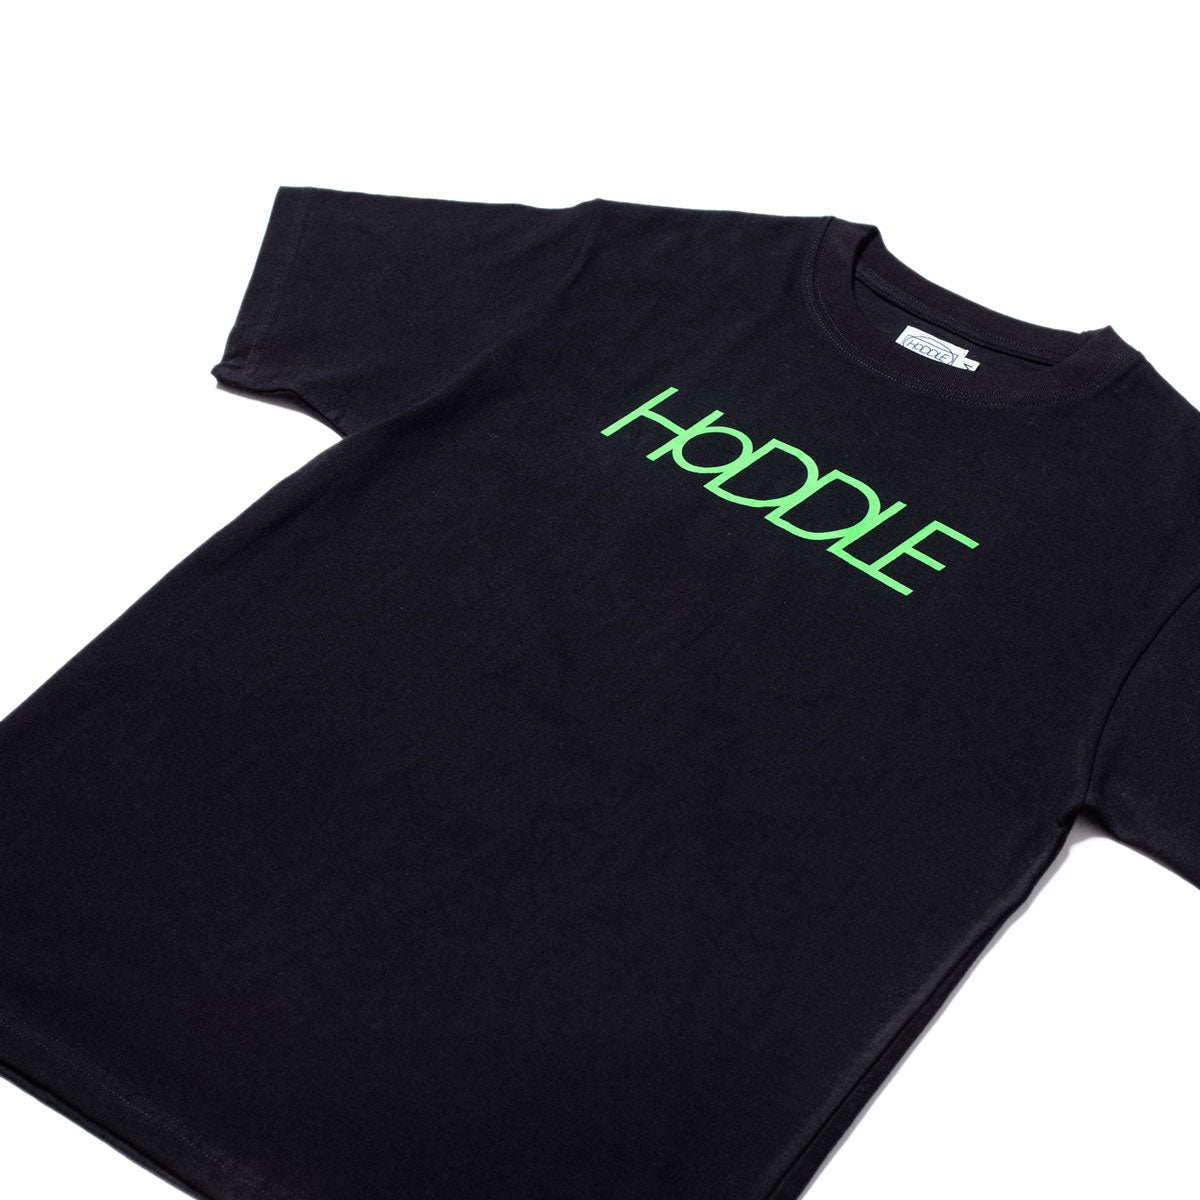 Hoddle Logo T-Shirt - Black/Green image 3